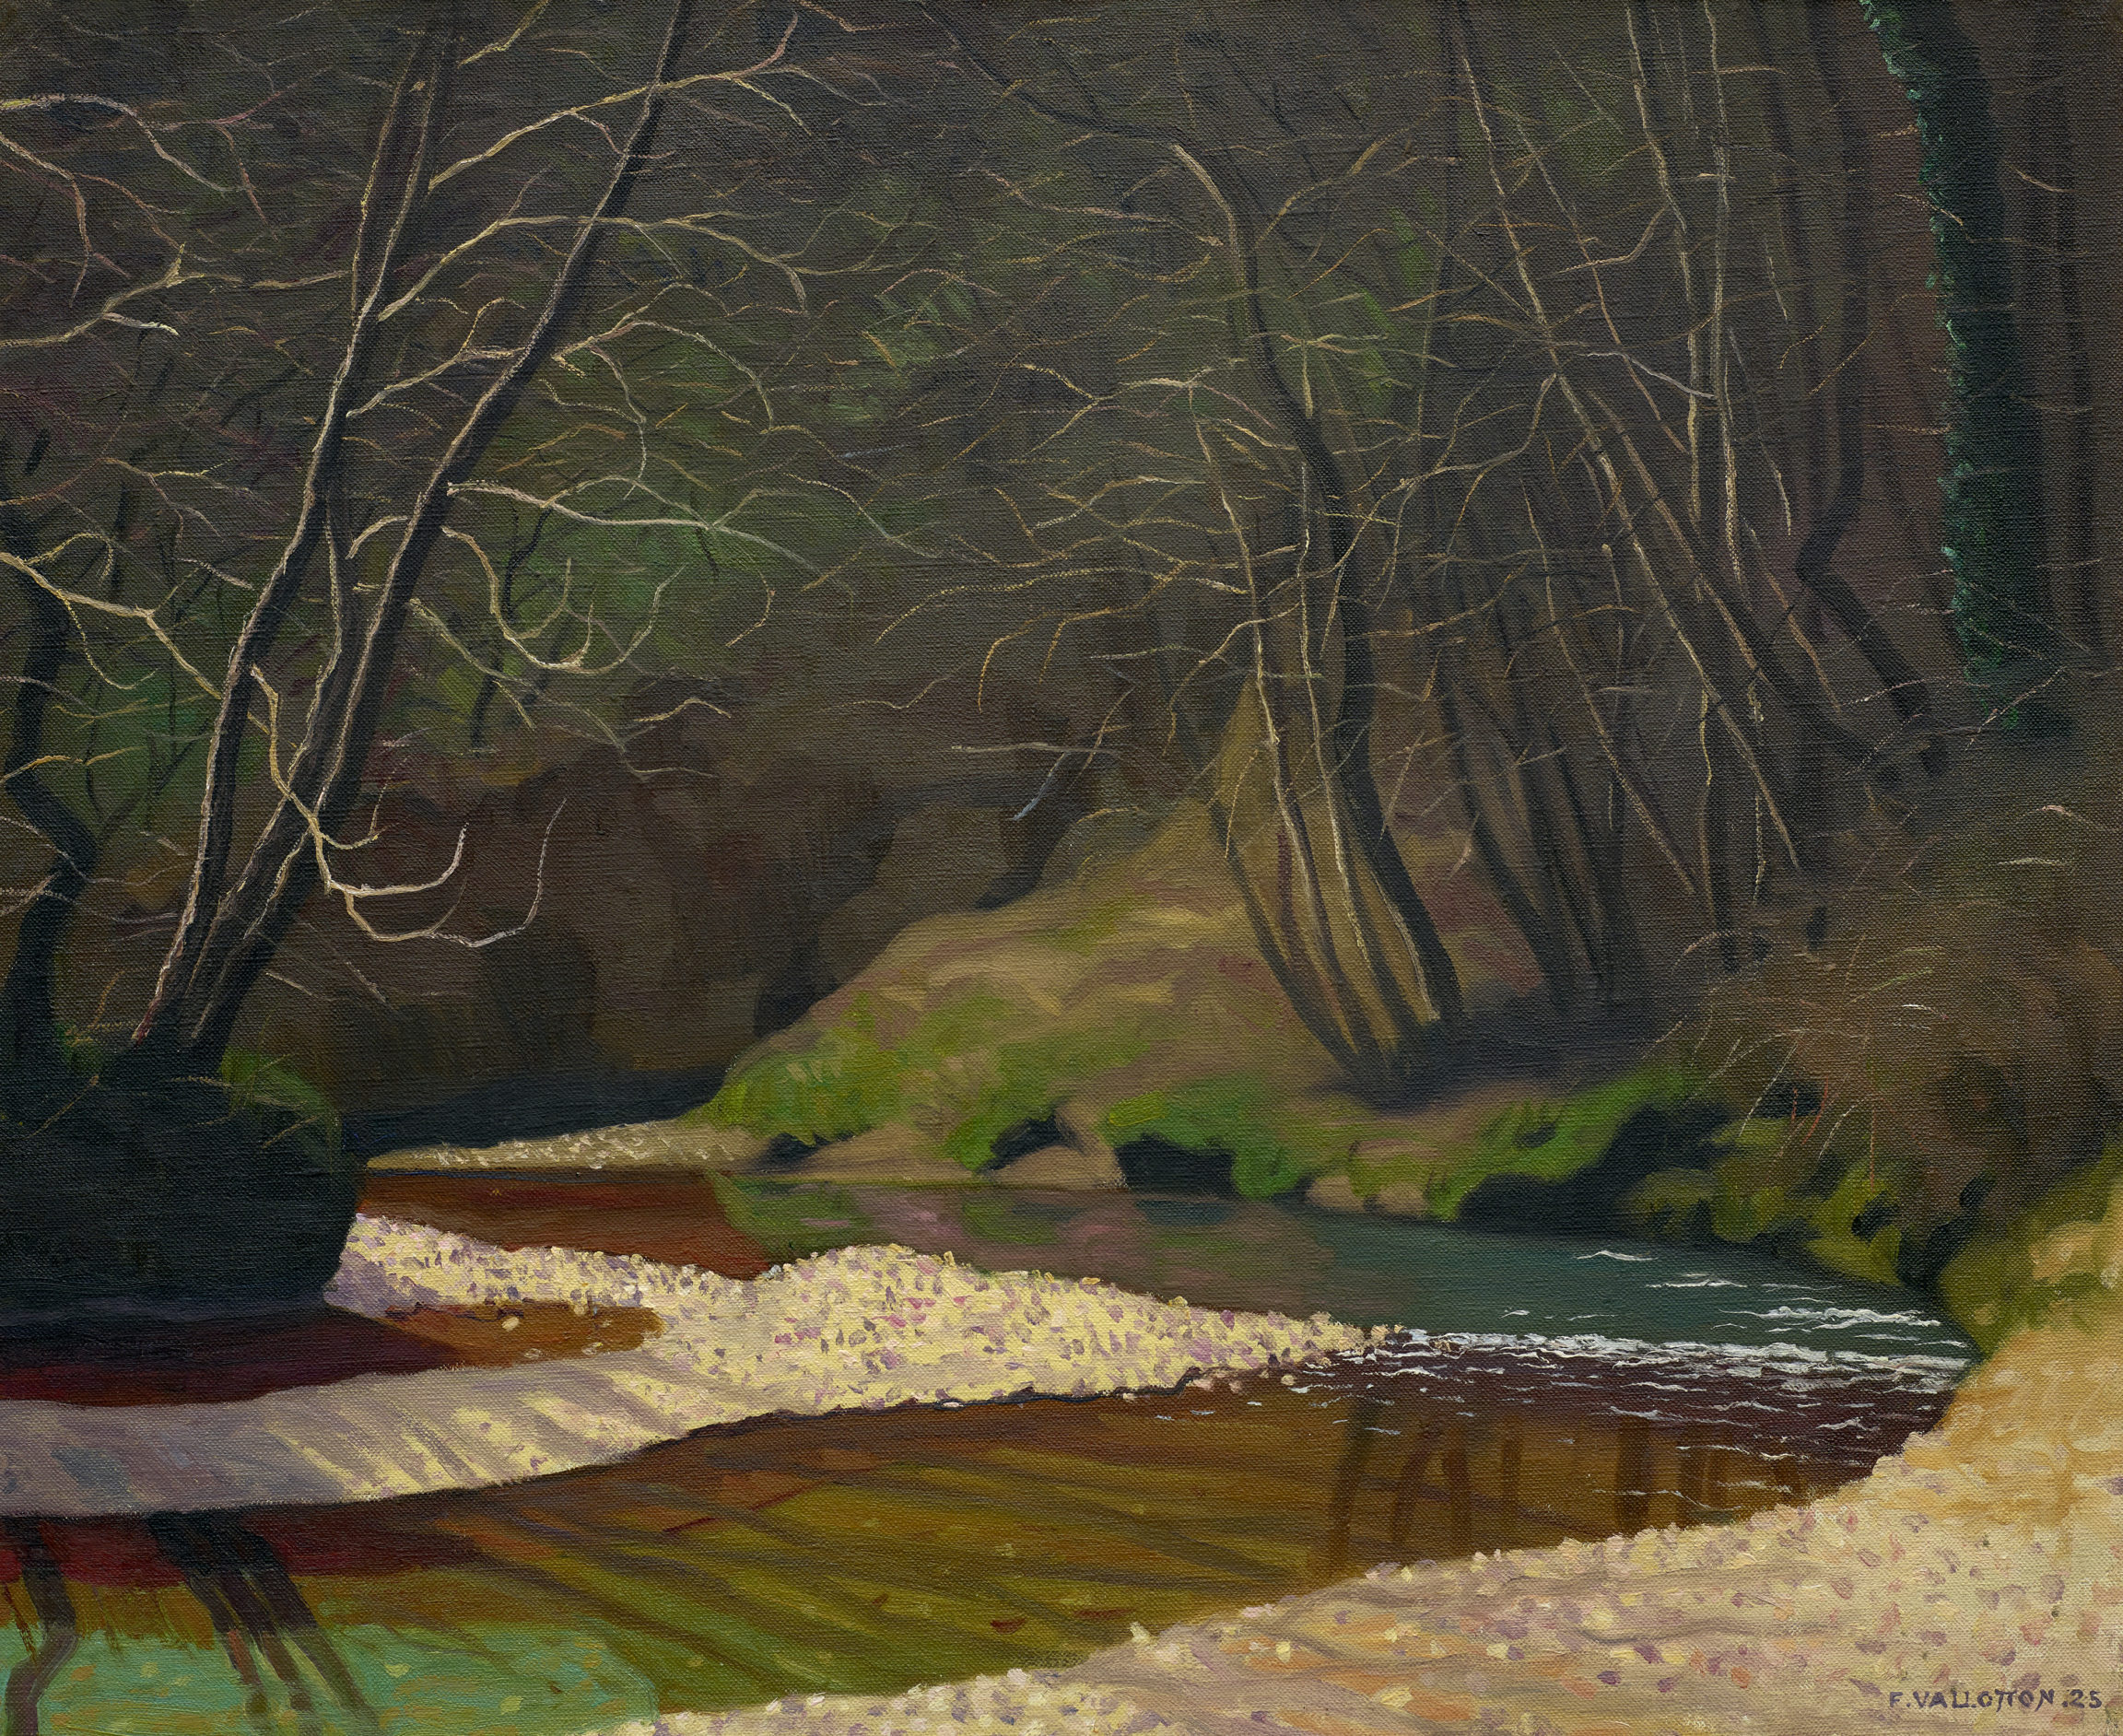 Félix Vallotton, Ruisseau rouille et galets blancs (Rust Stream and White Pebbles), 1921